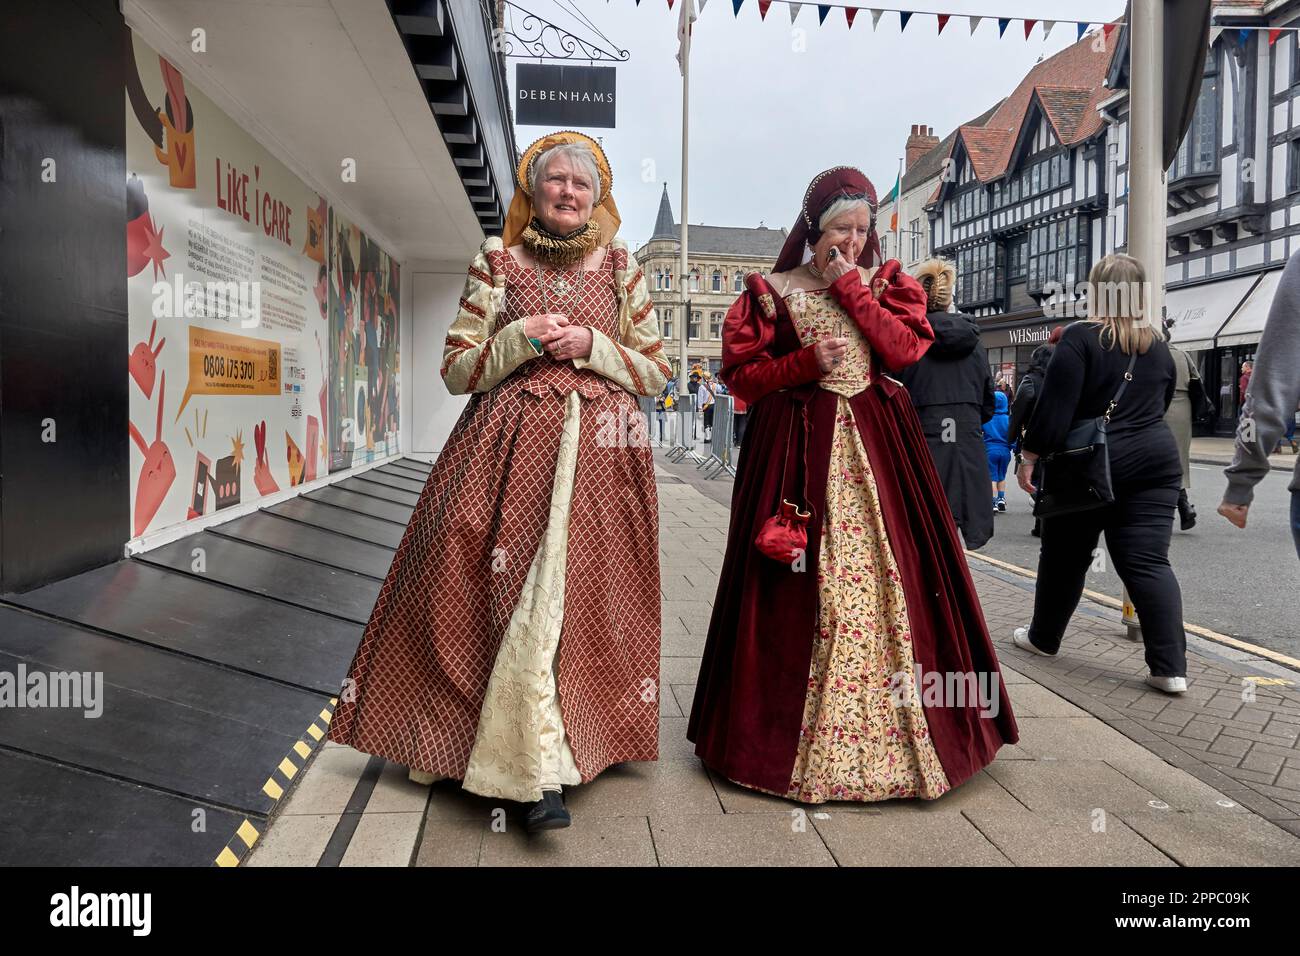 William Shakespeare birthday celebration with local people dressed in Elizabethan costume. Stratford upon Avon, England, UK. Stock Photo